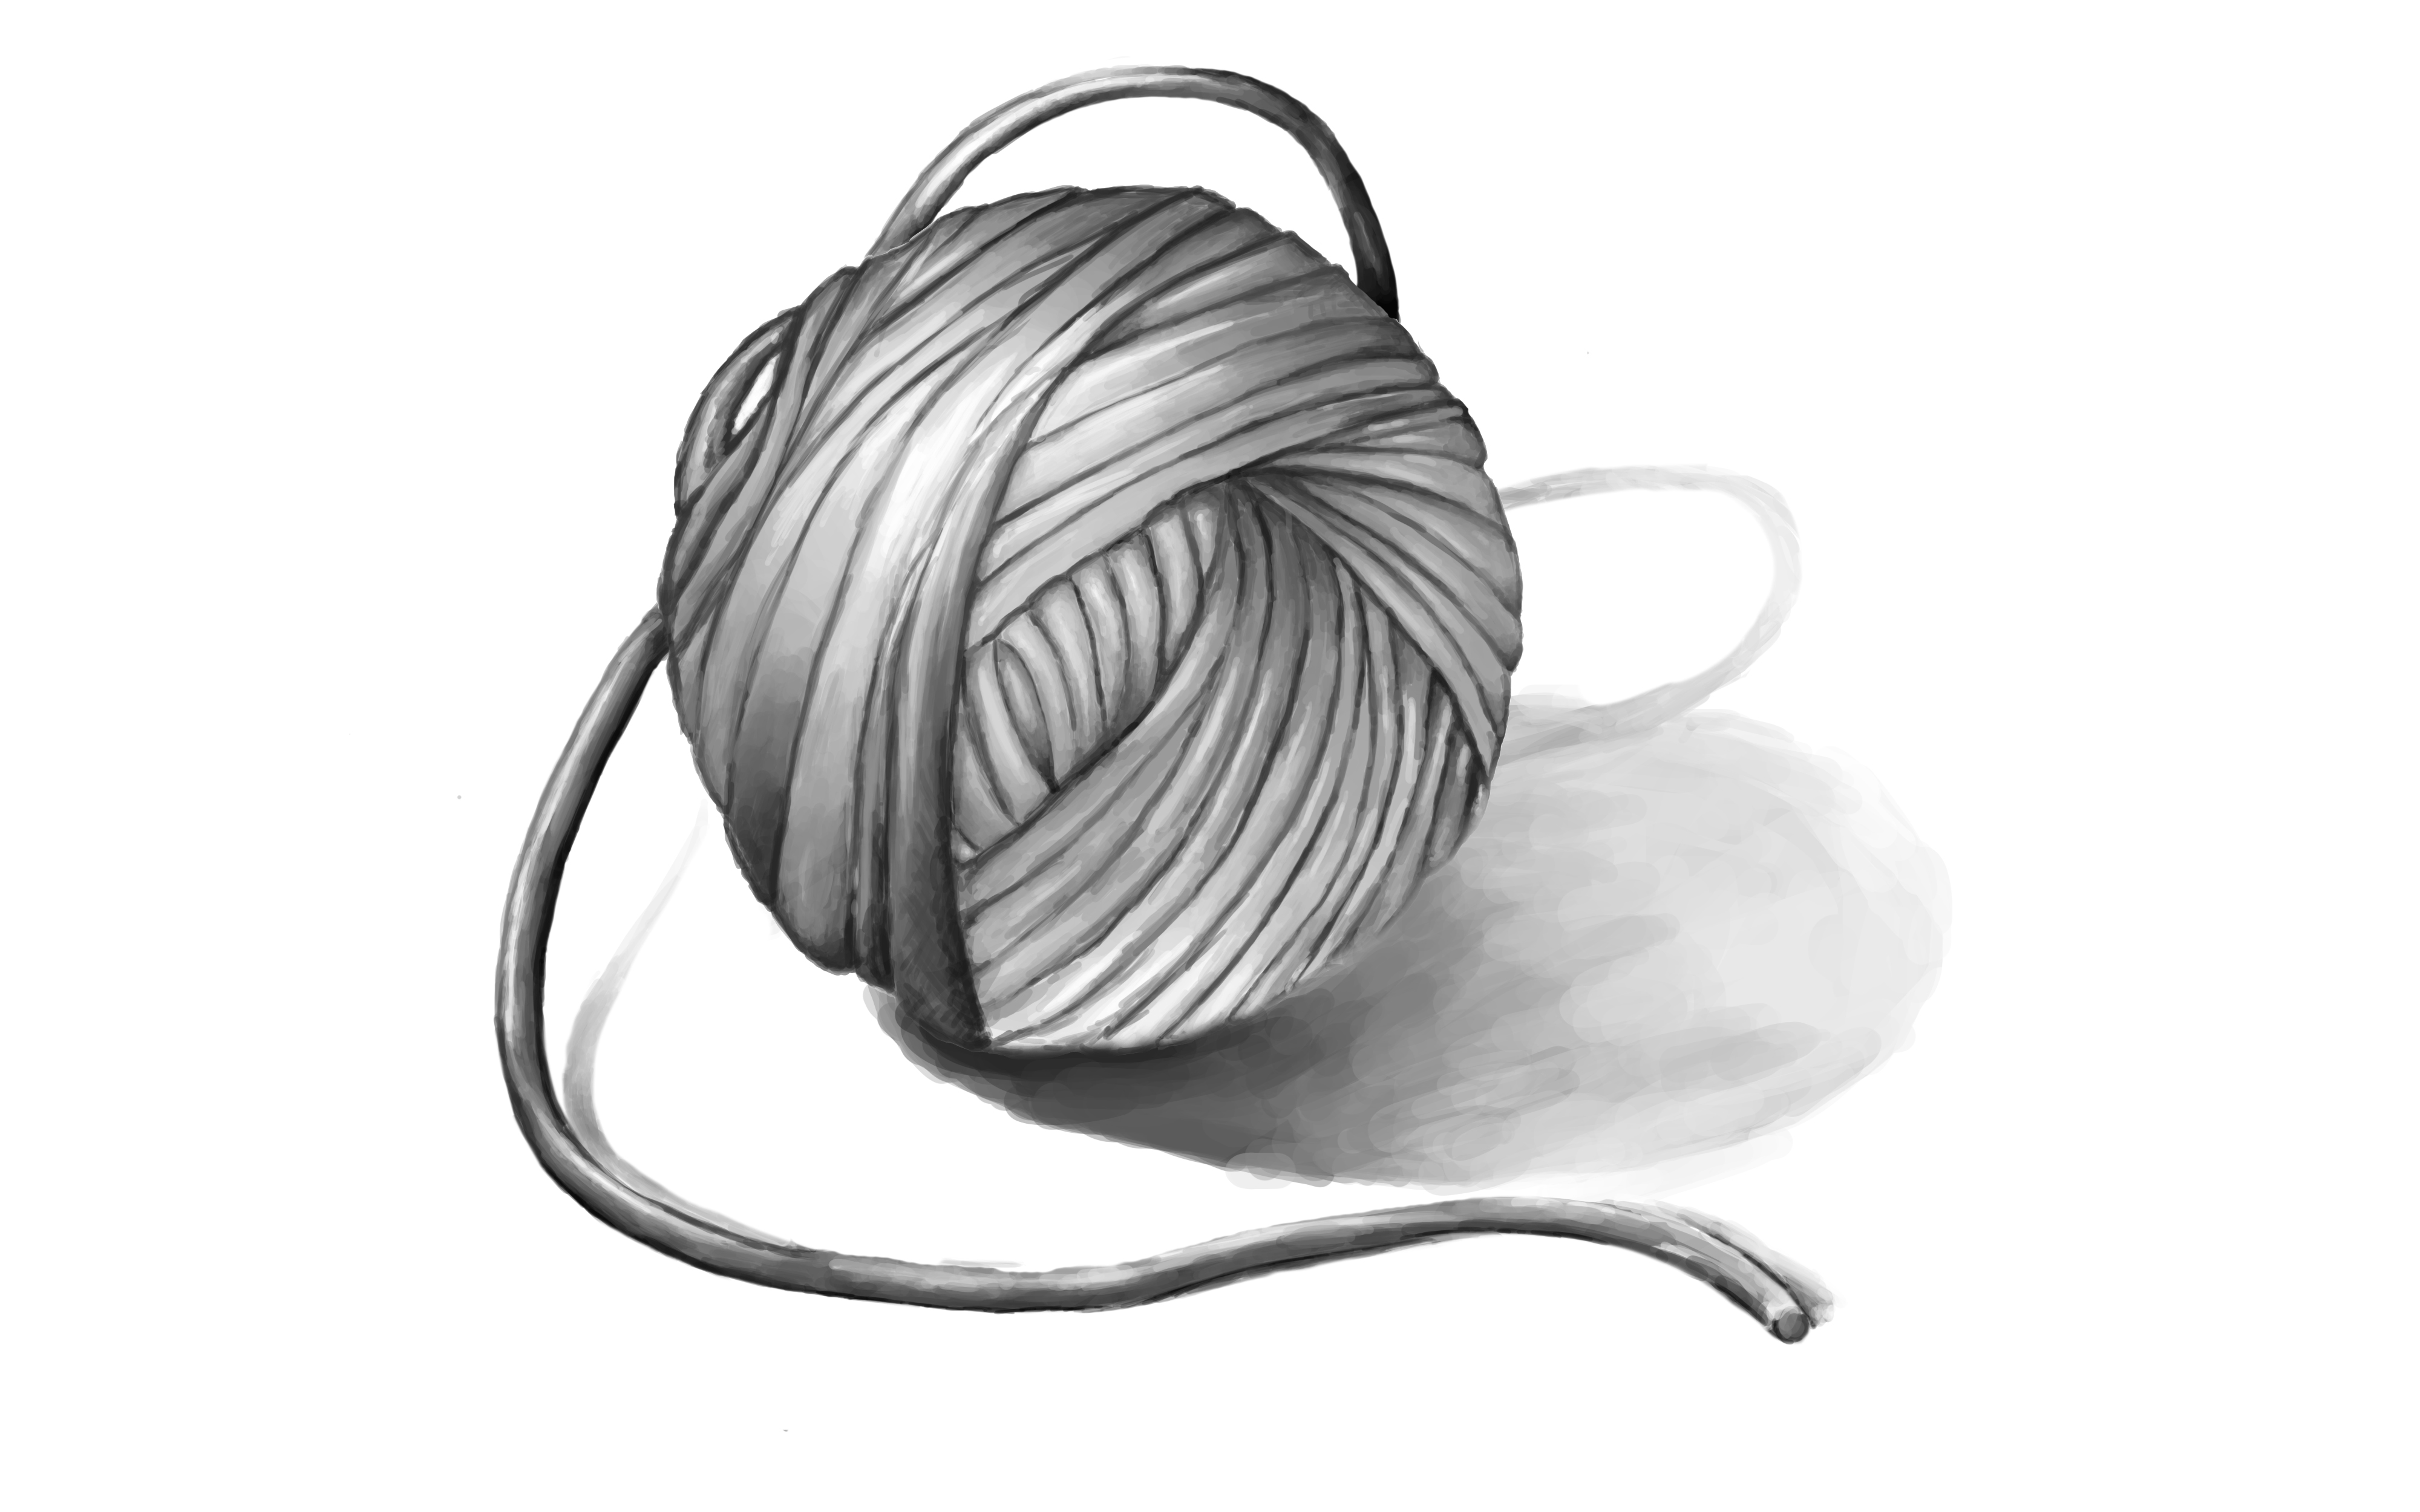 A Ball of Yarn - J.E.Mathison on emaze